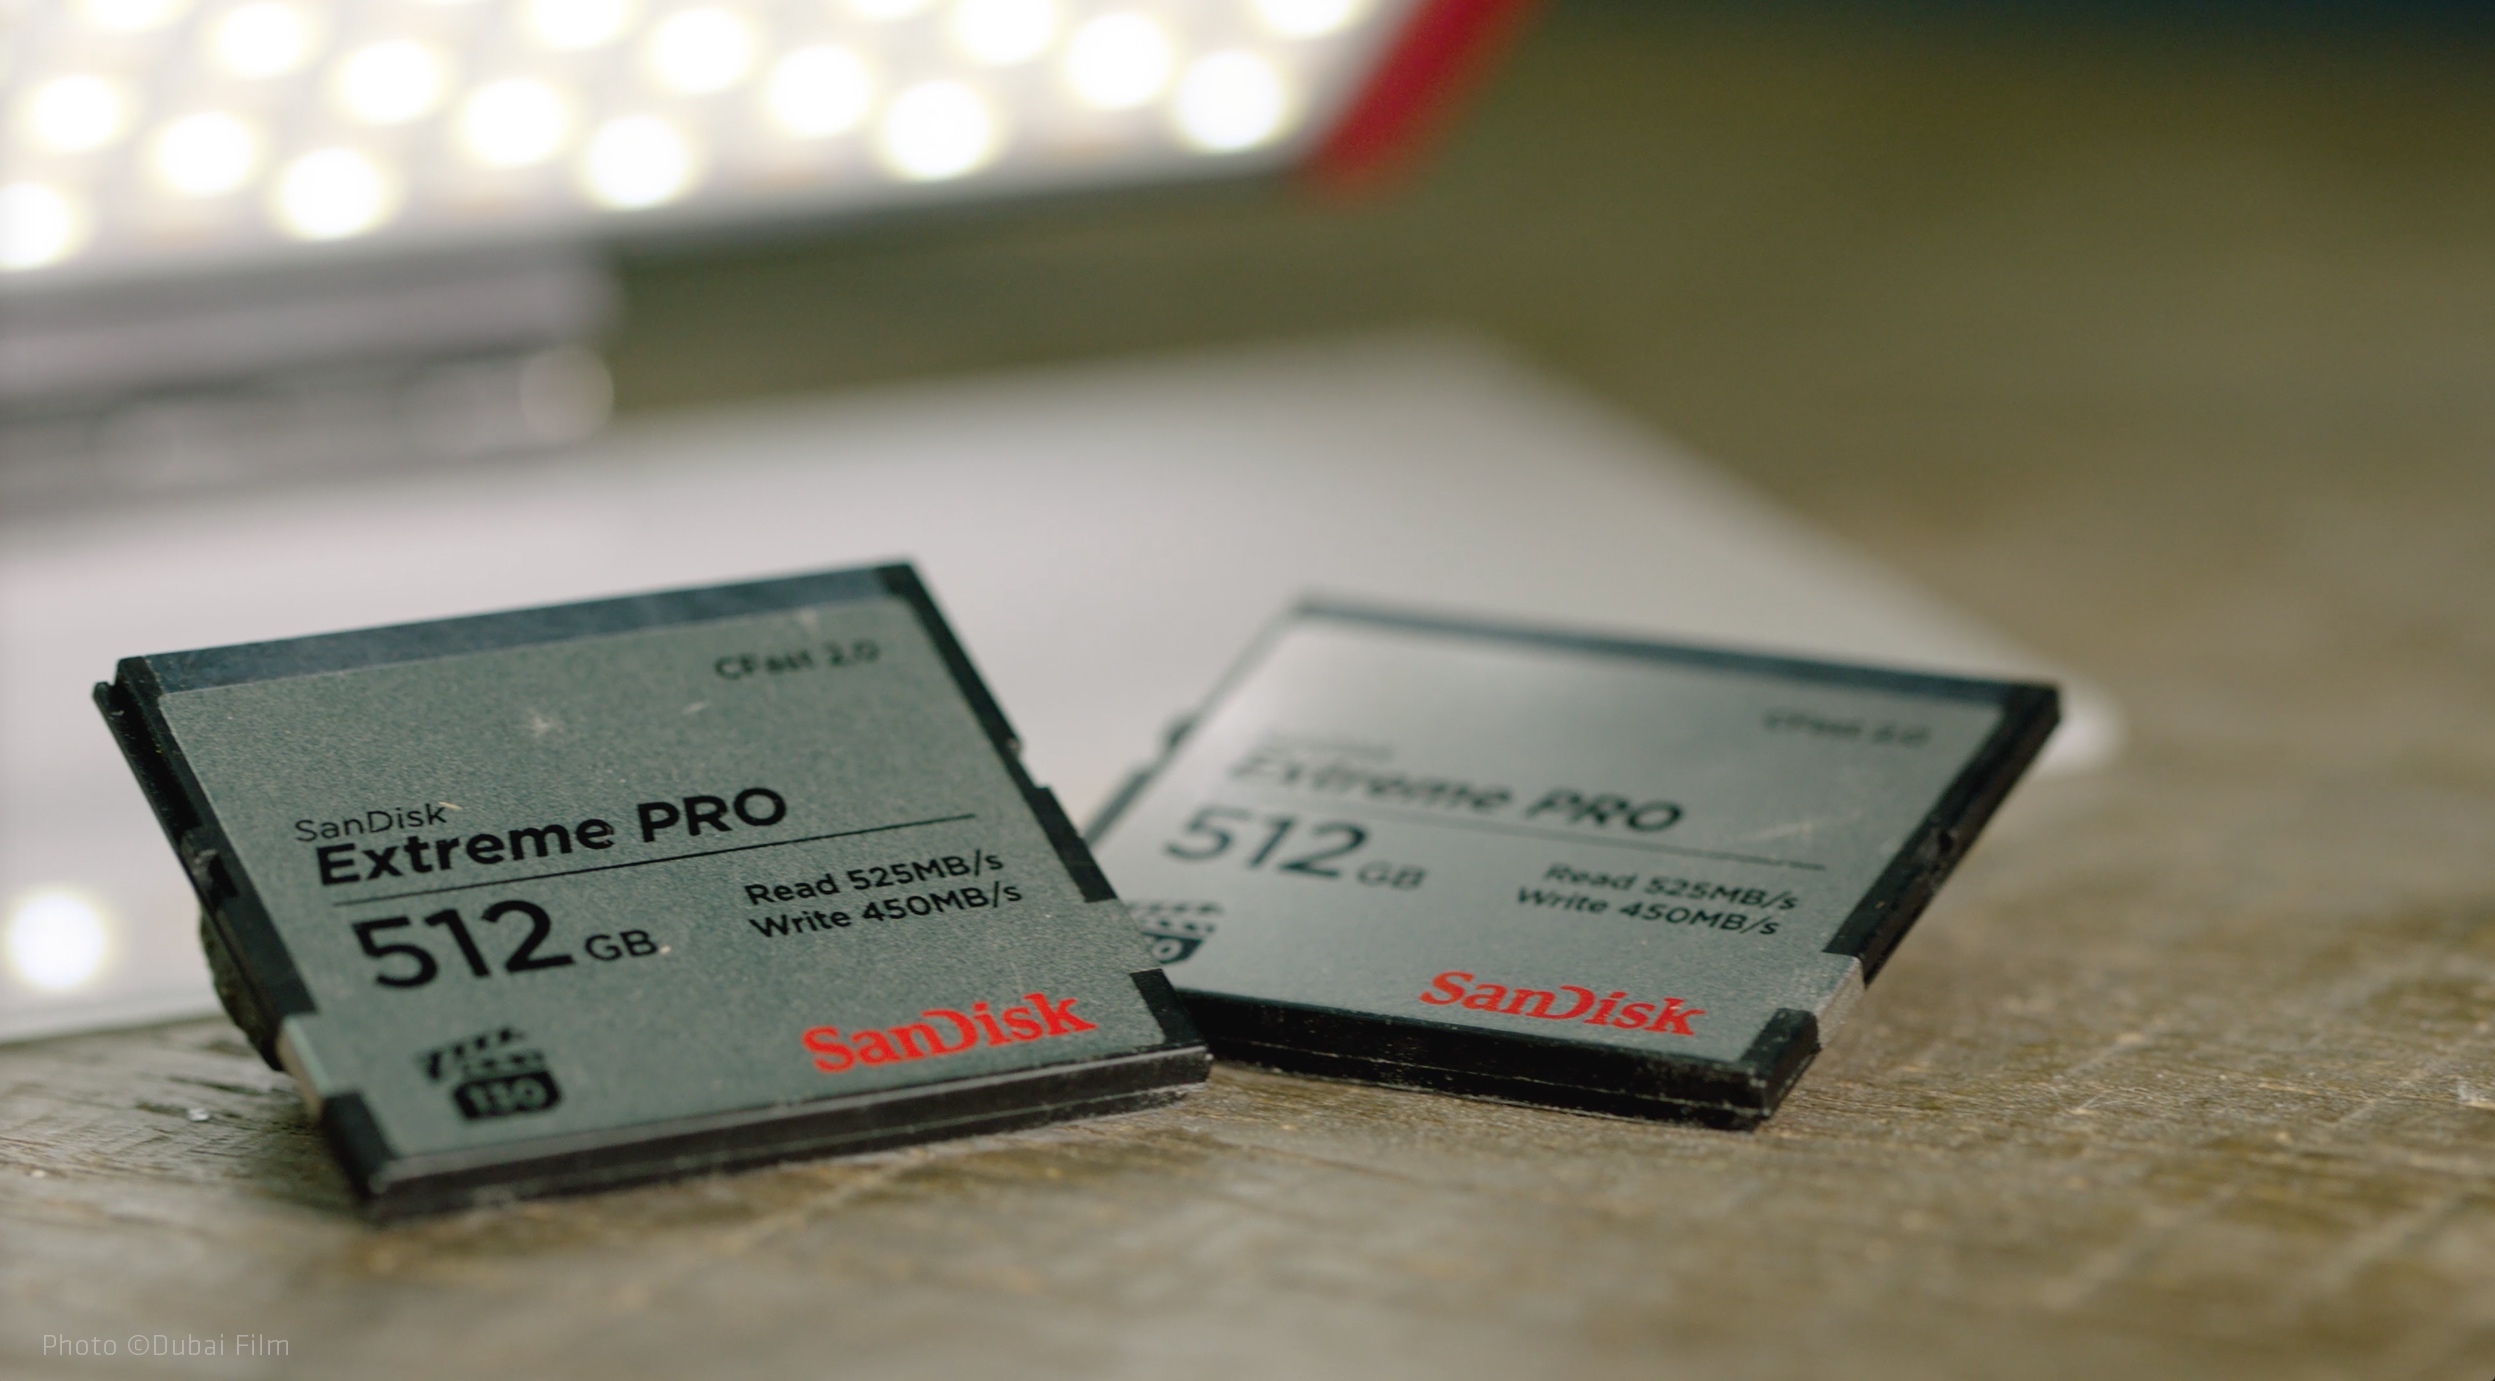 SanDisk Extreme Pro 256 Go CFast 2.0